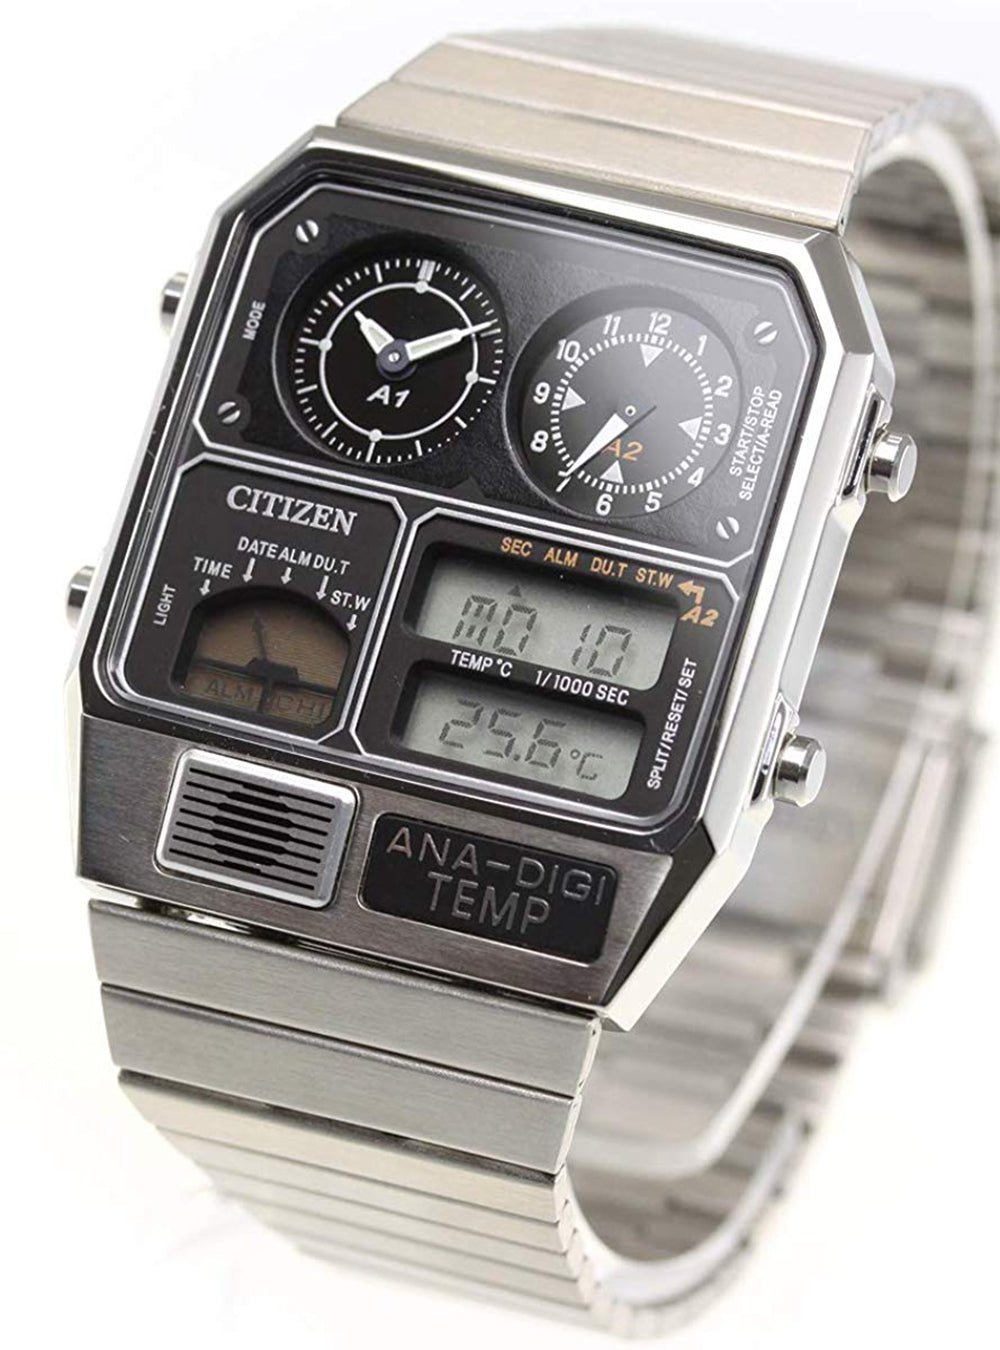 Citizen Ana-Digi Temp Reprint Model Watch Silver Jg2101-78E